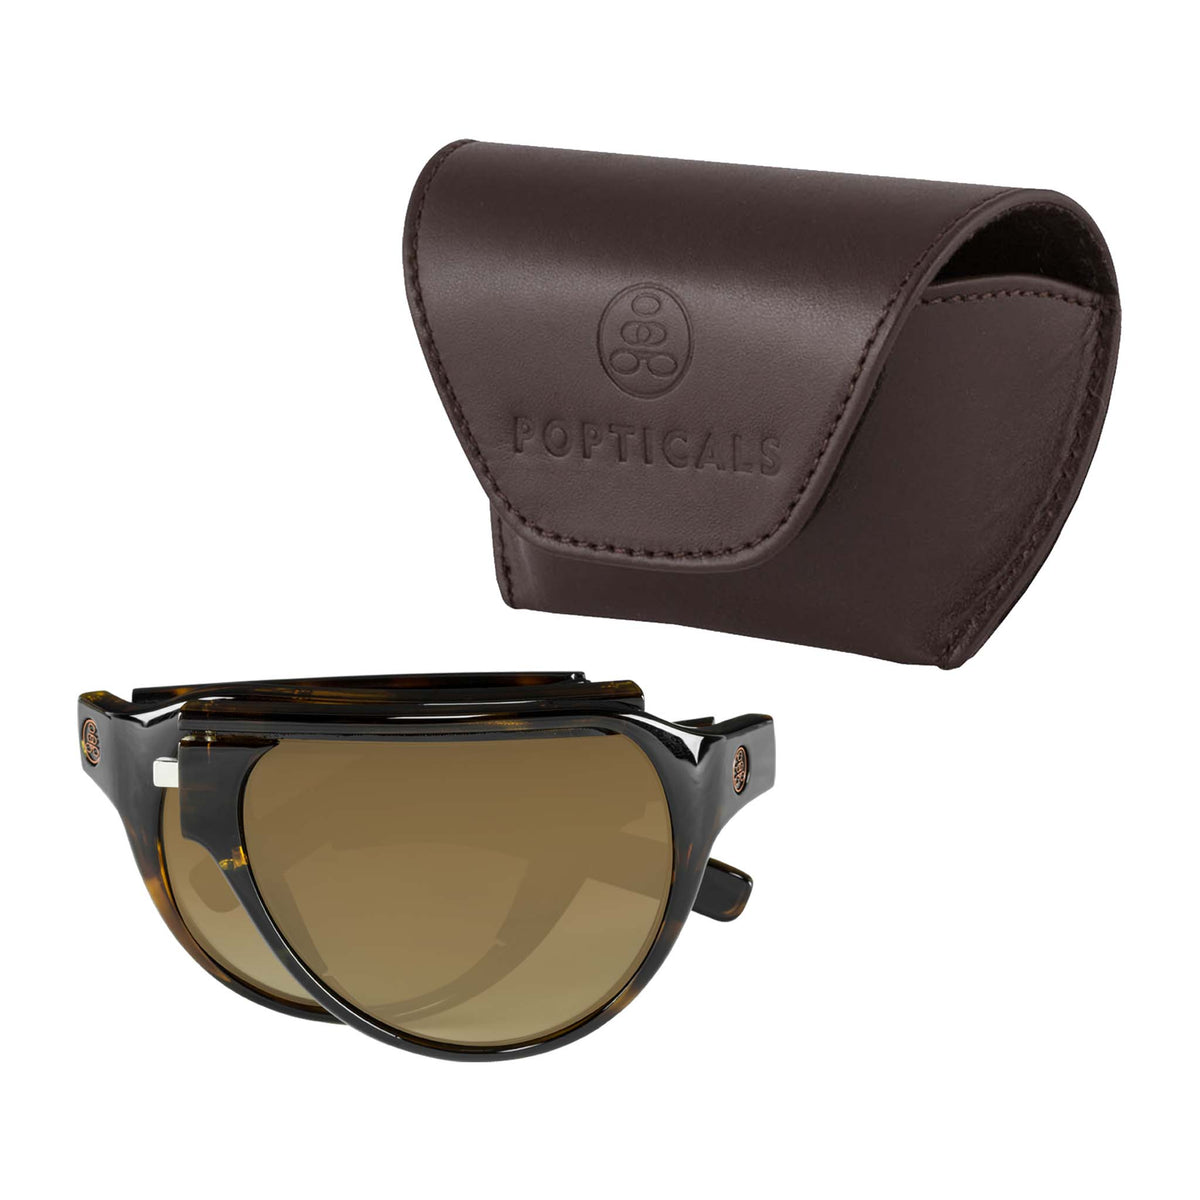 Popticals, Premium Compact Sunglasses, PopAir, 300010-CTNC, Polarized Sunglasses, Gloss Tortoise Frame, Gradient Brown Lenses, Case View